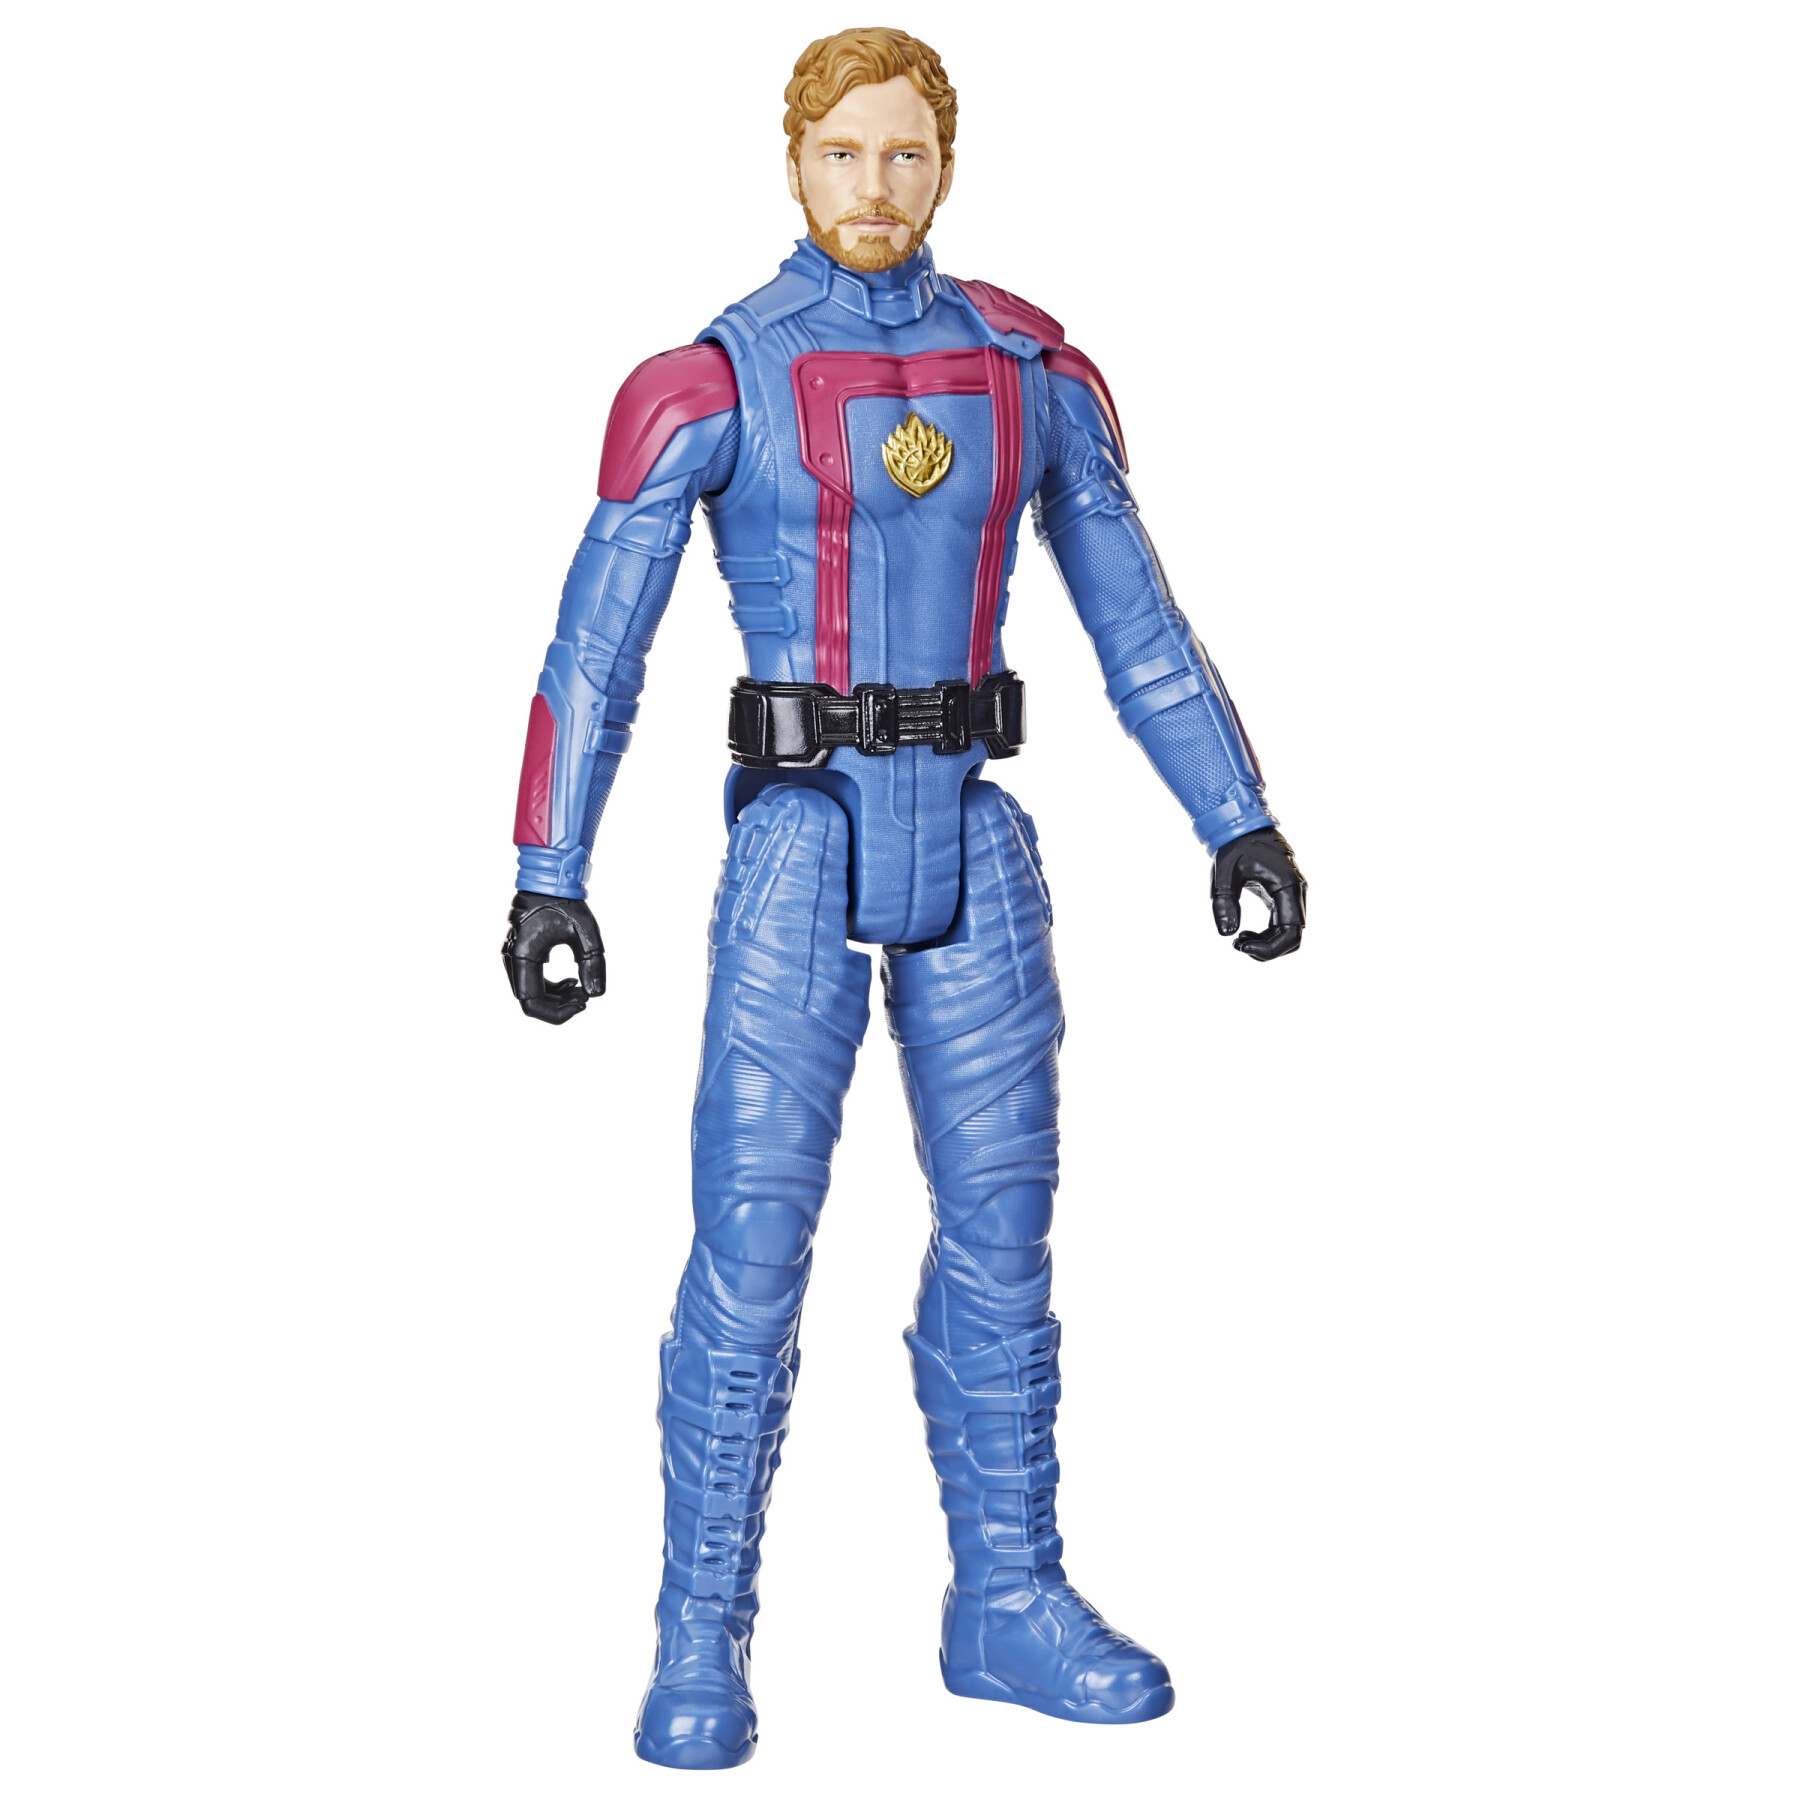 Hasbro marvel guardiani della galassia vol. 3, titan hero series star-lord action figure 30 cm - MARVEL